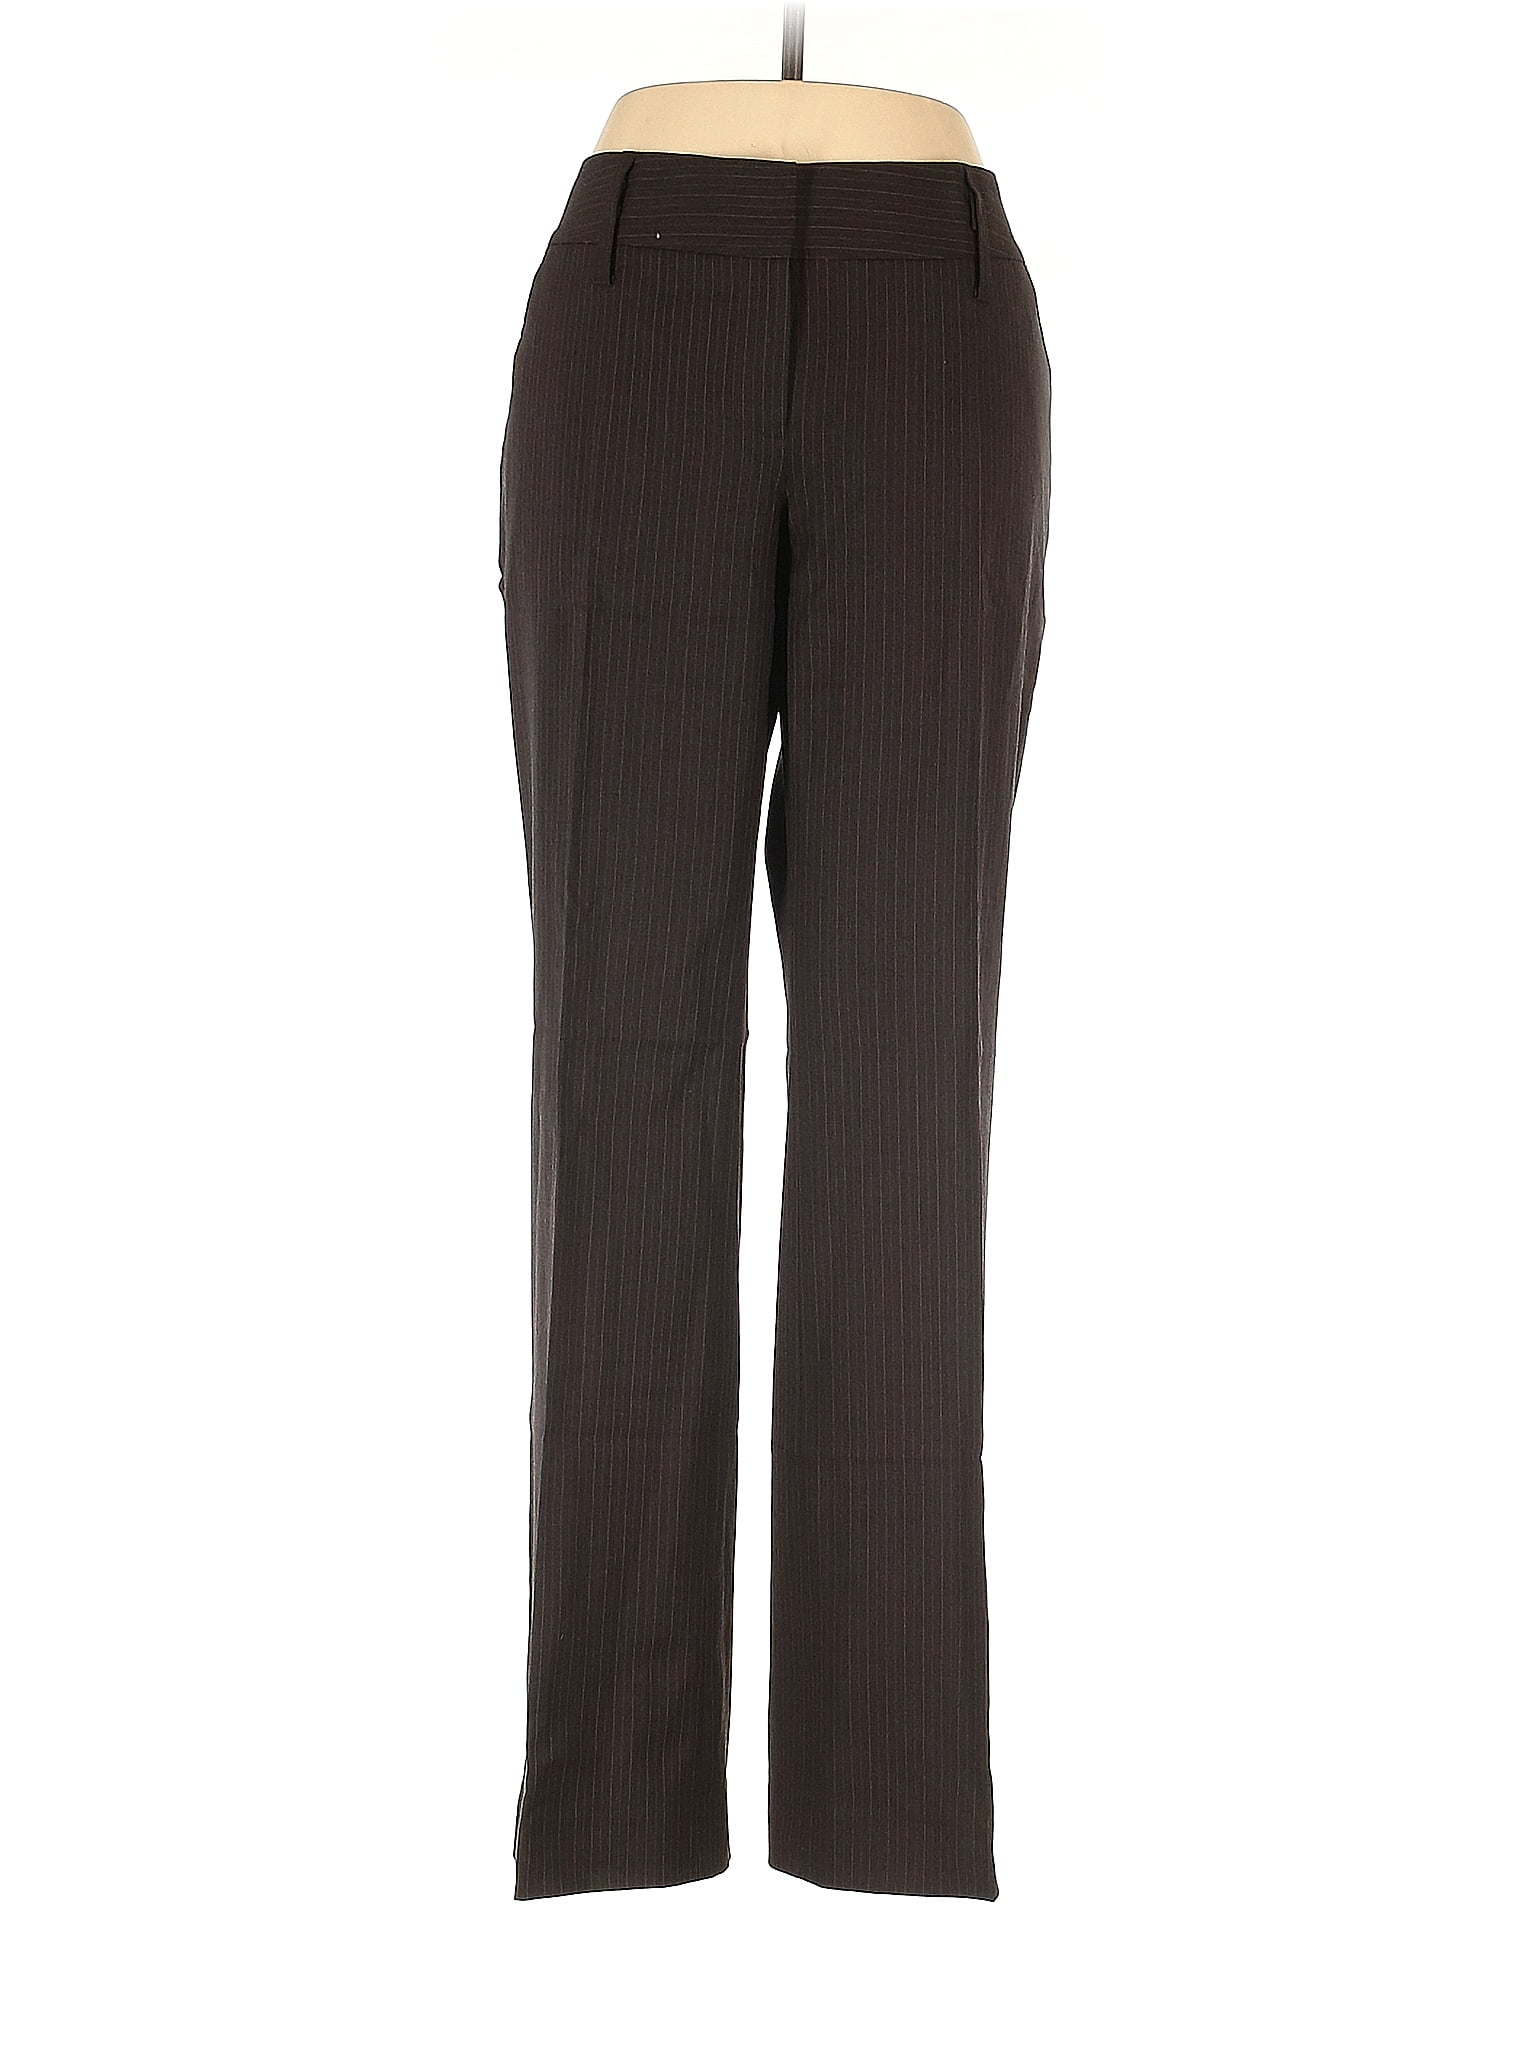 Audrey Talbott Brown Wool Pants Size 8 - 80% off | thredUP